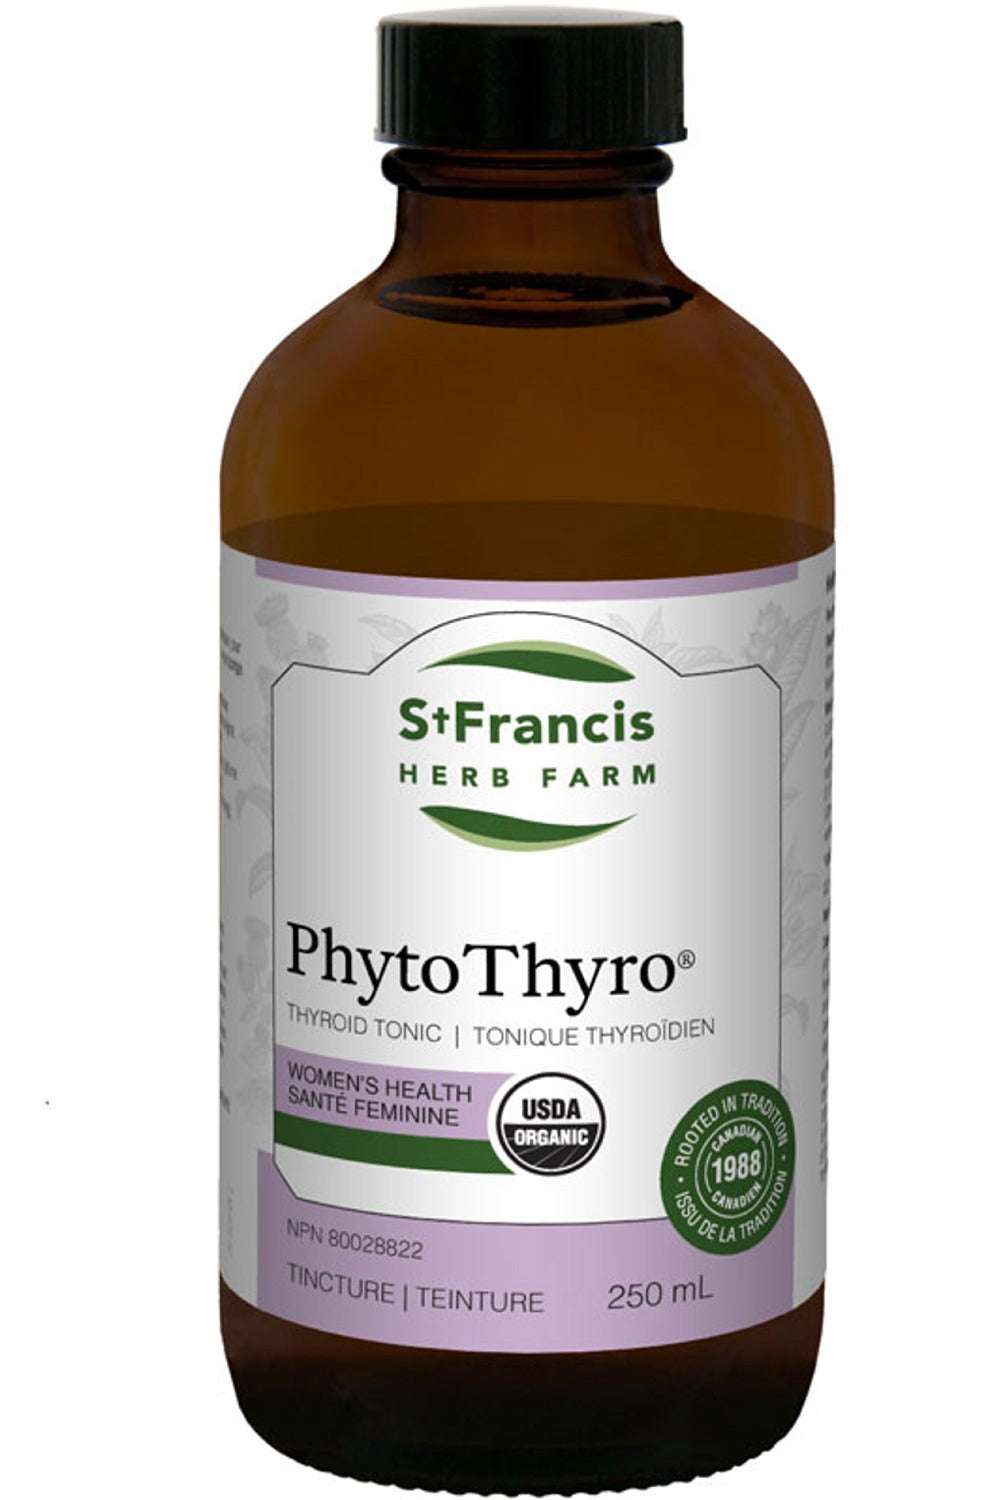 ST FRANCIS HERB FARM PhytoThyro (250 ml)